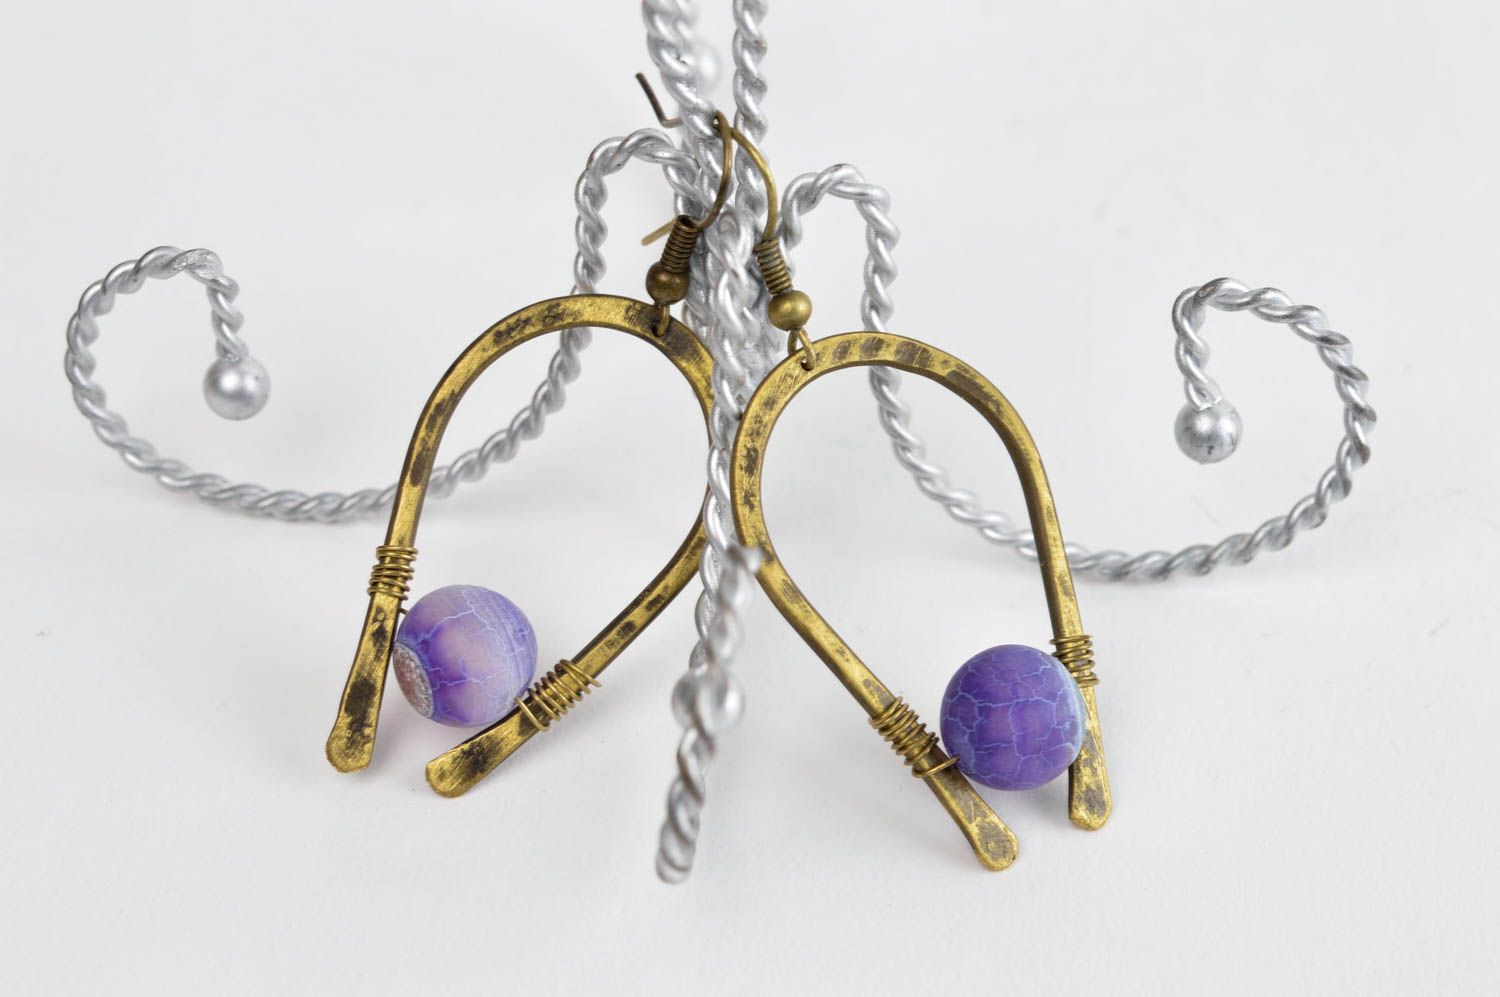 Long handmade metal earrings metal jewelry designs accessories for girls photo 1